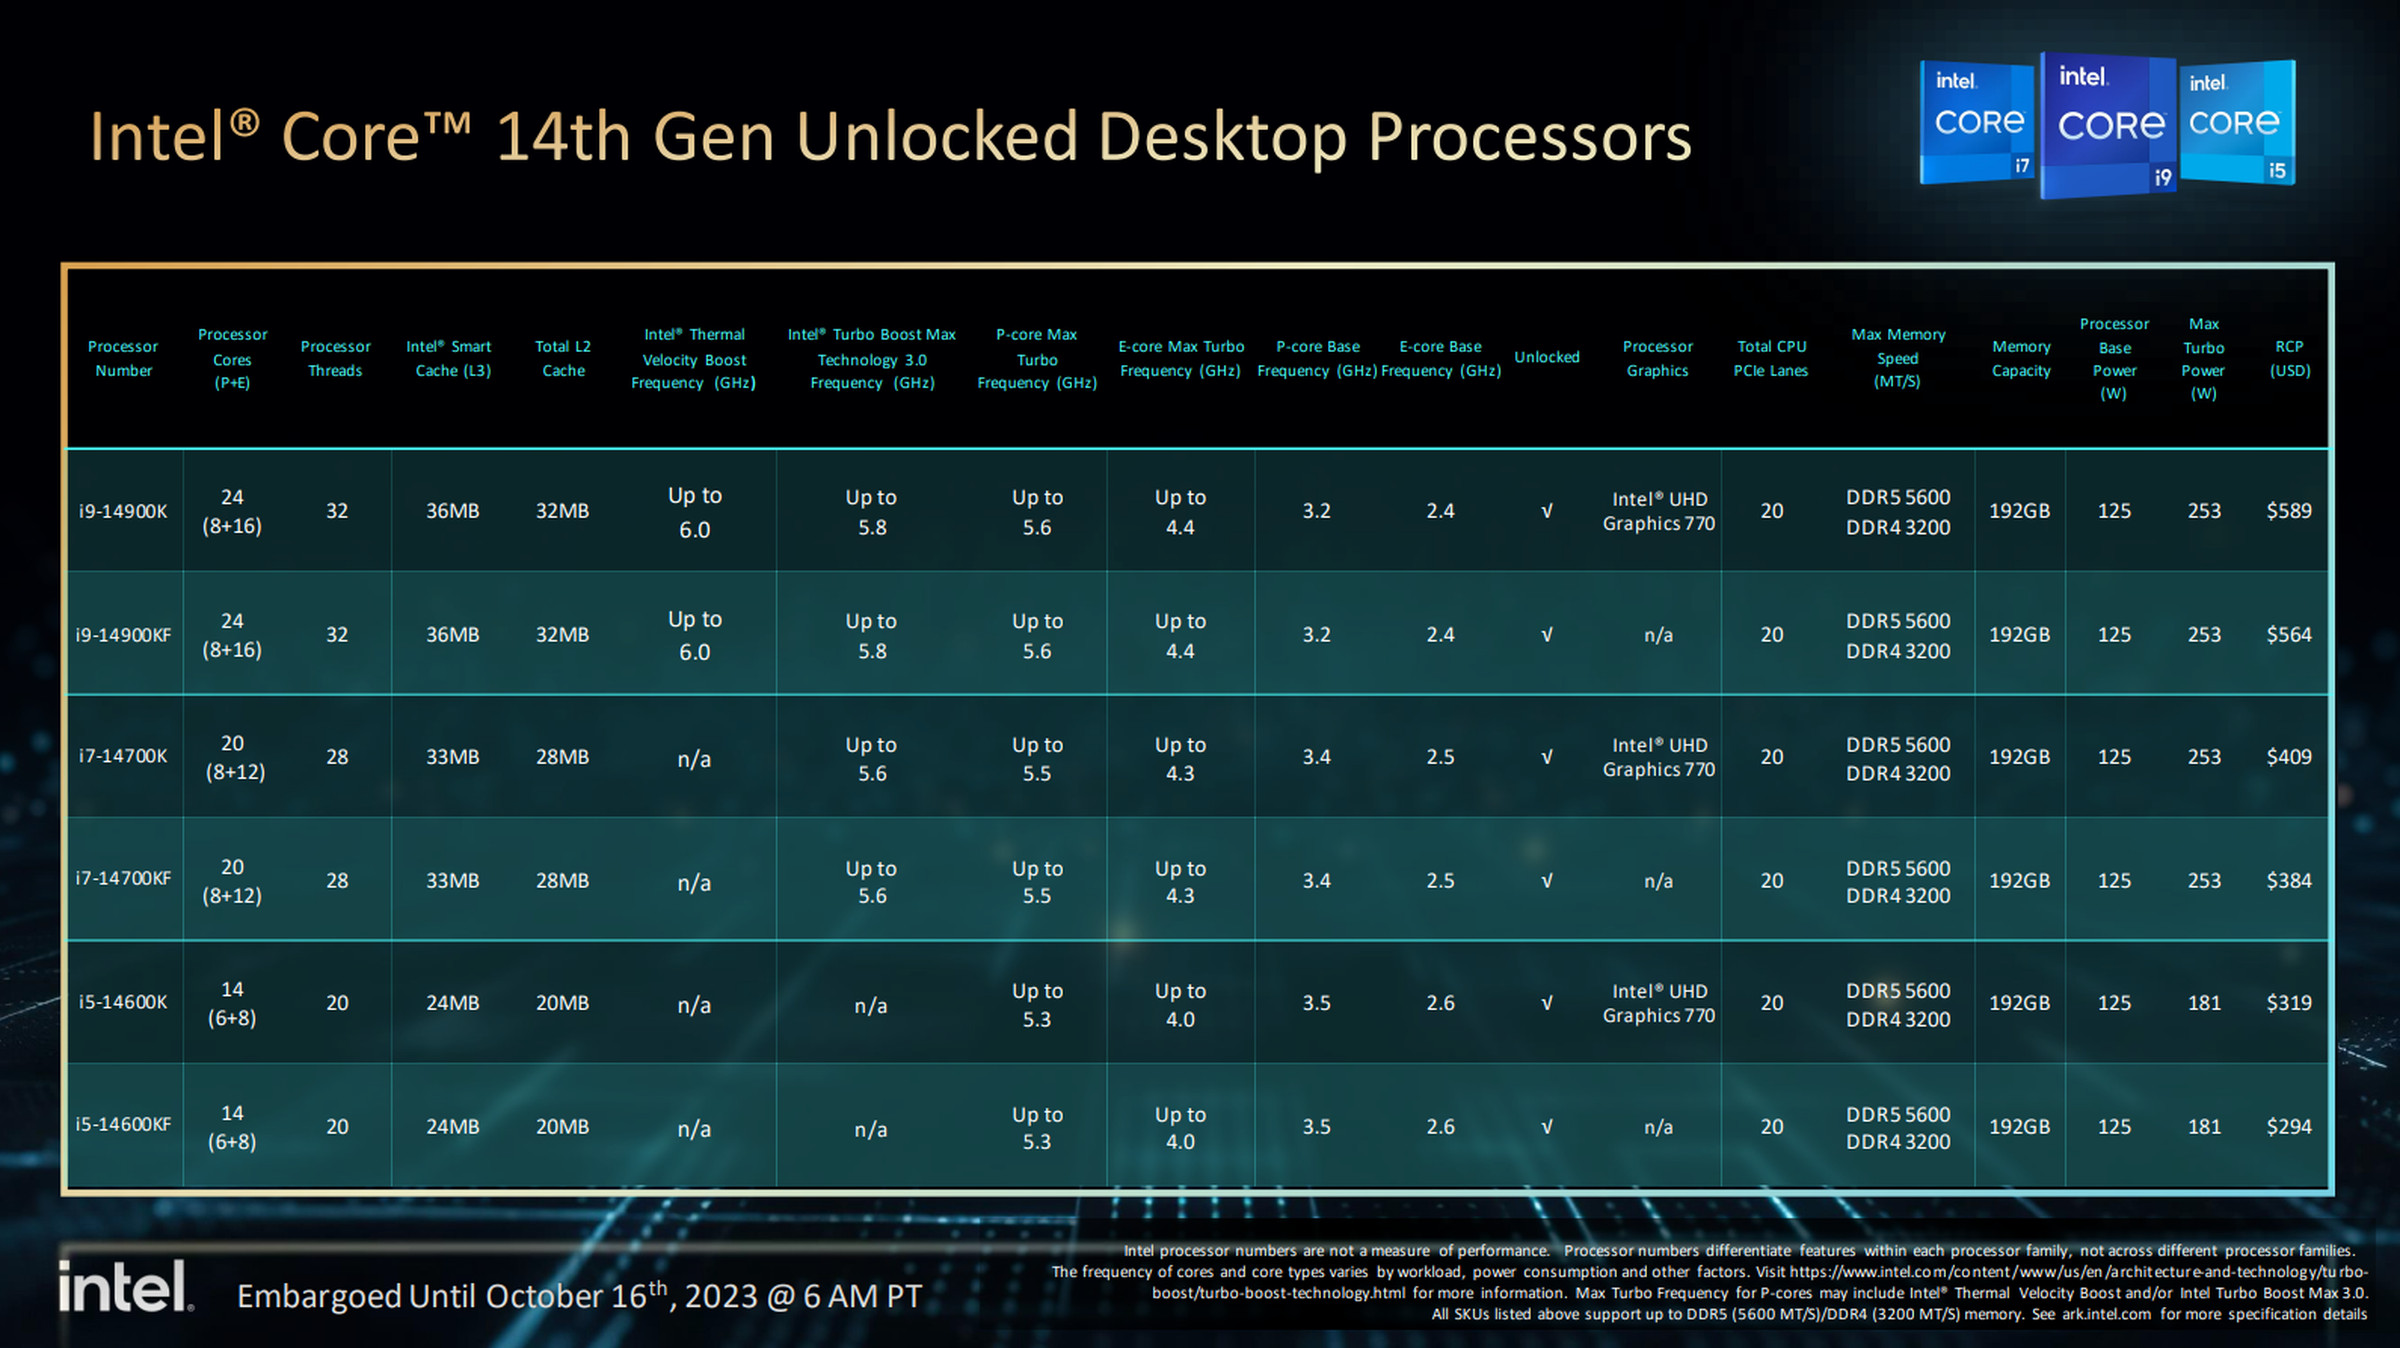 Intel’s full 14th Gen lineup.